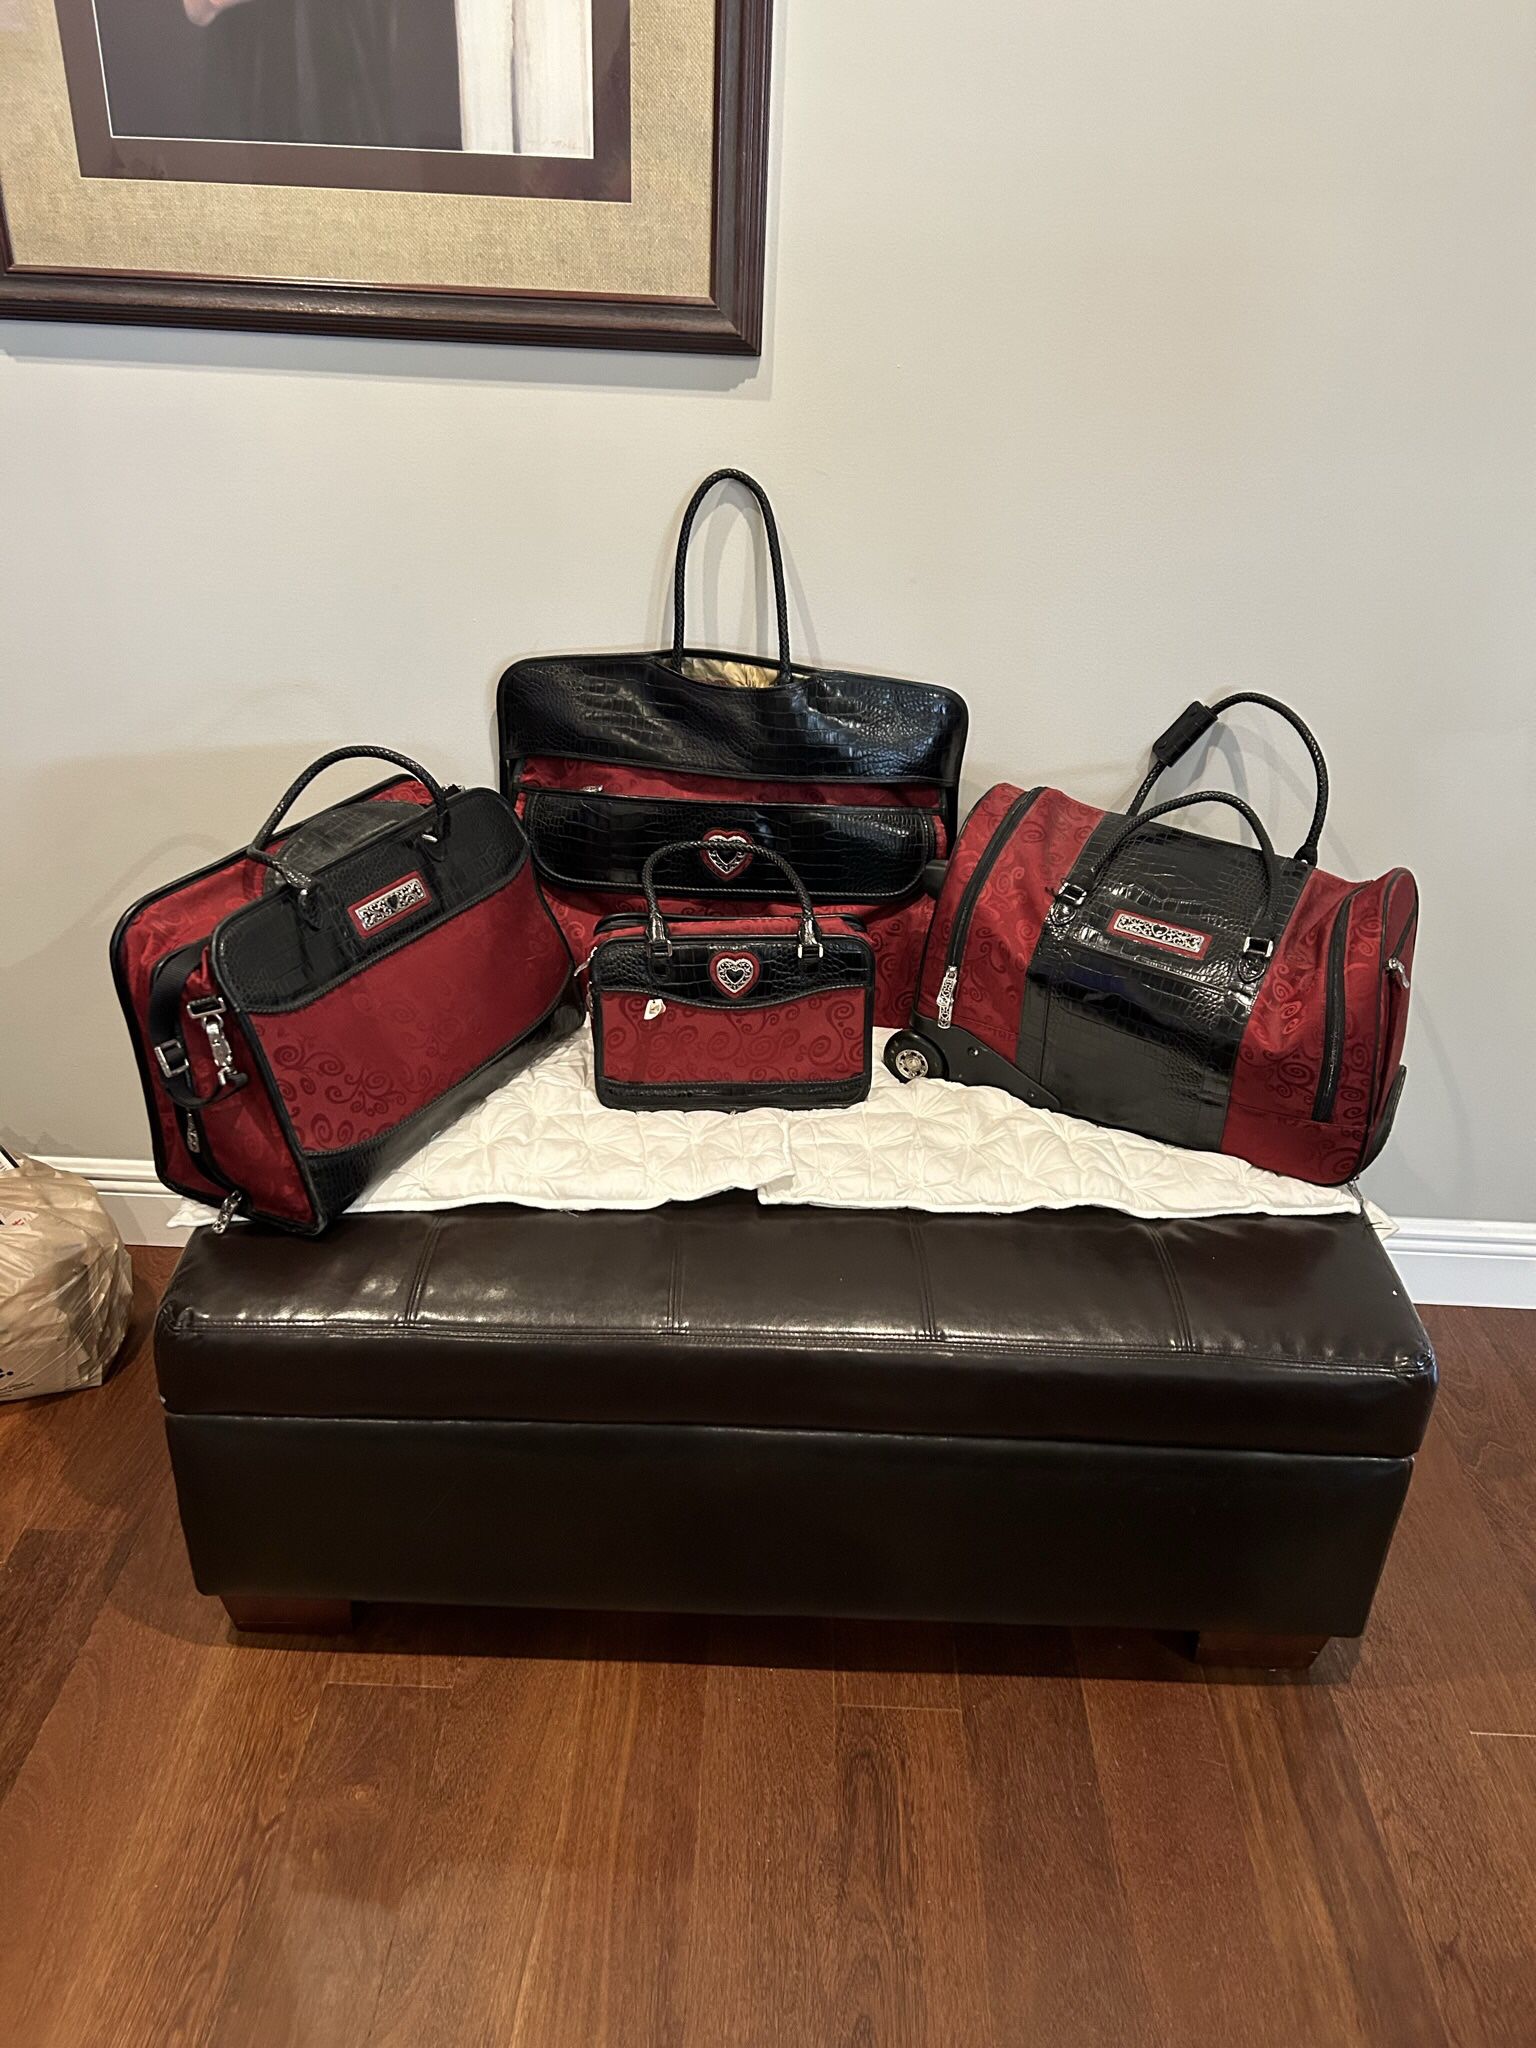 Brighton Ruby Red&Black 4 Piece Luggage Set!!! PLEASE MAKE OFFER!!!!